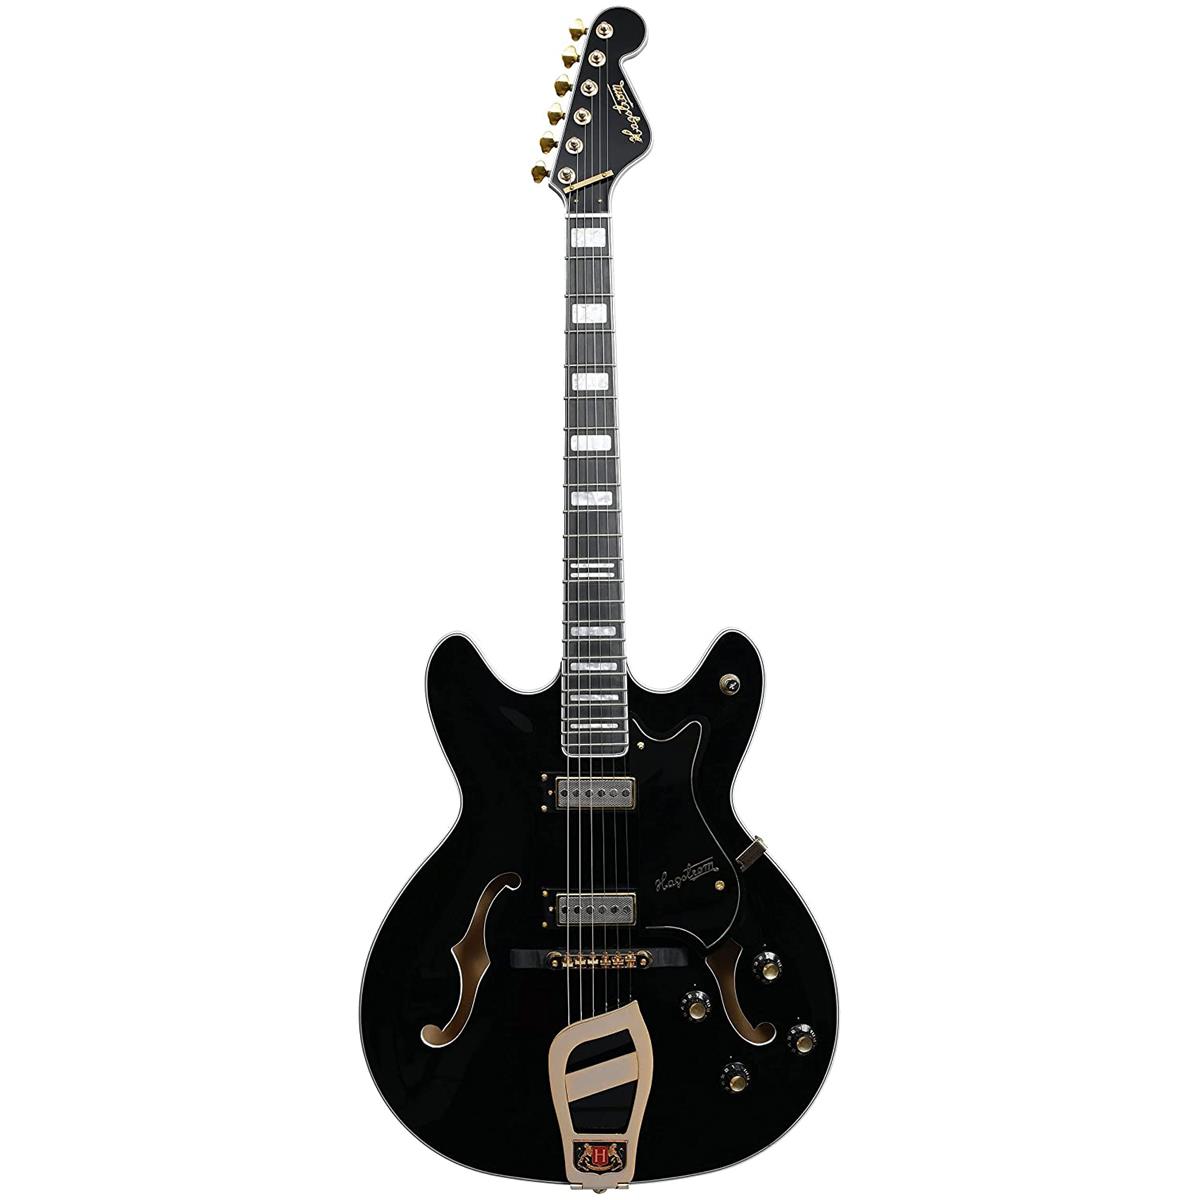 Hagstrom '67 Viking II Electric Guitar, Black Gloss -  VIK67-G-BLK